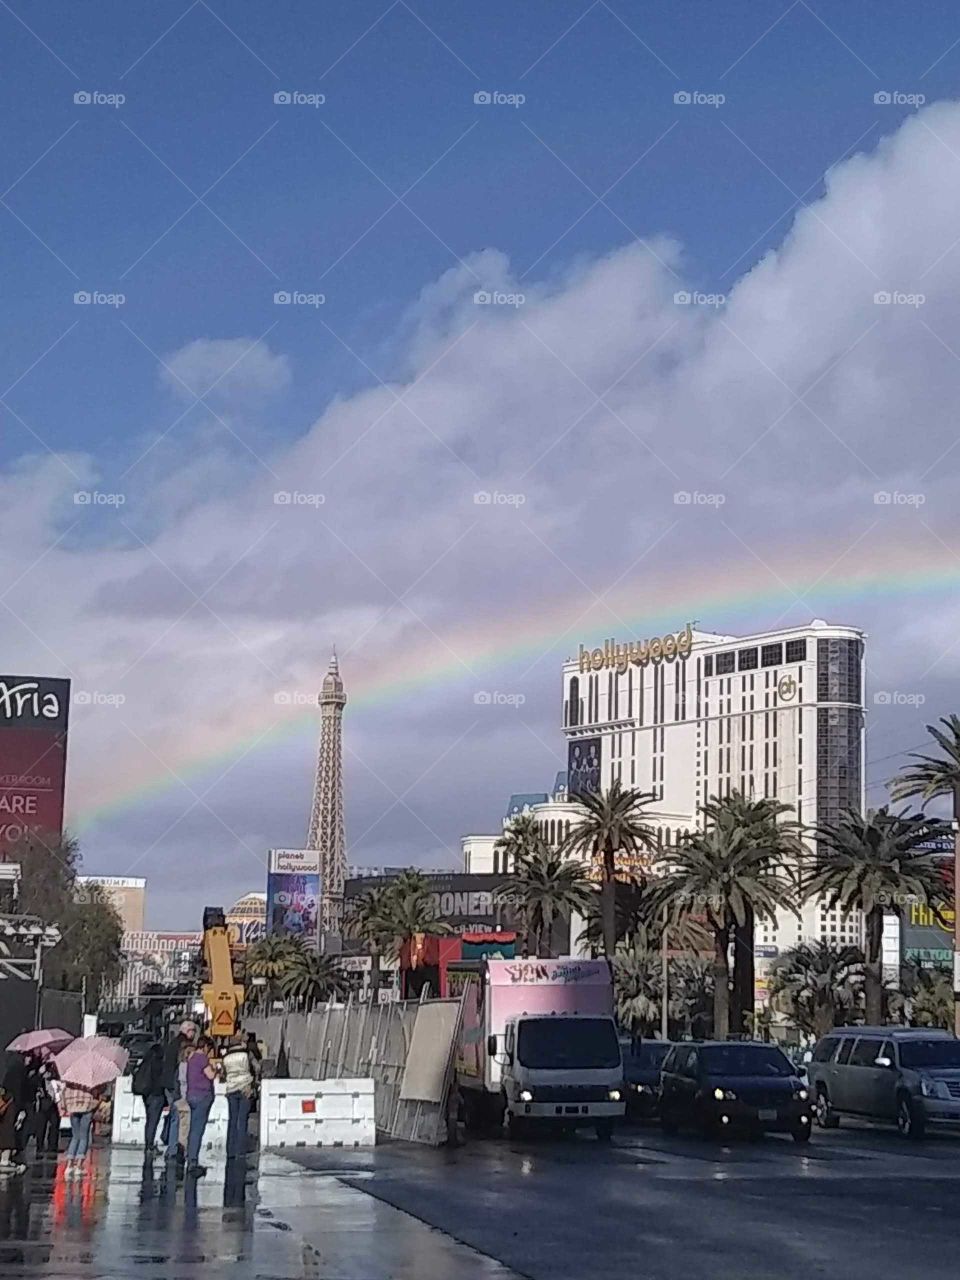 Rainbow across the sky above Las Vegas Blvd